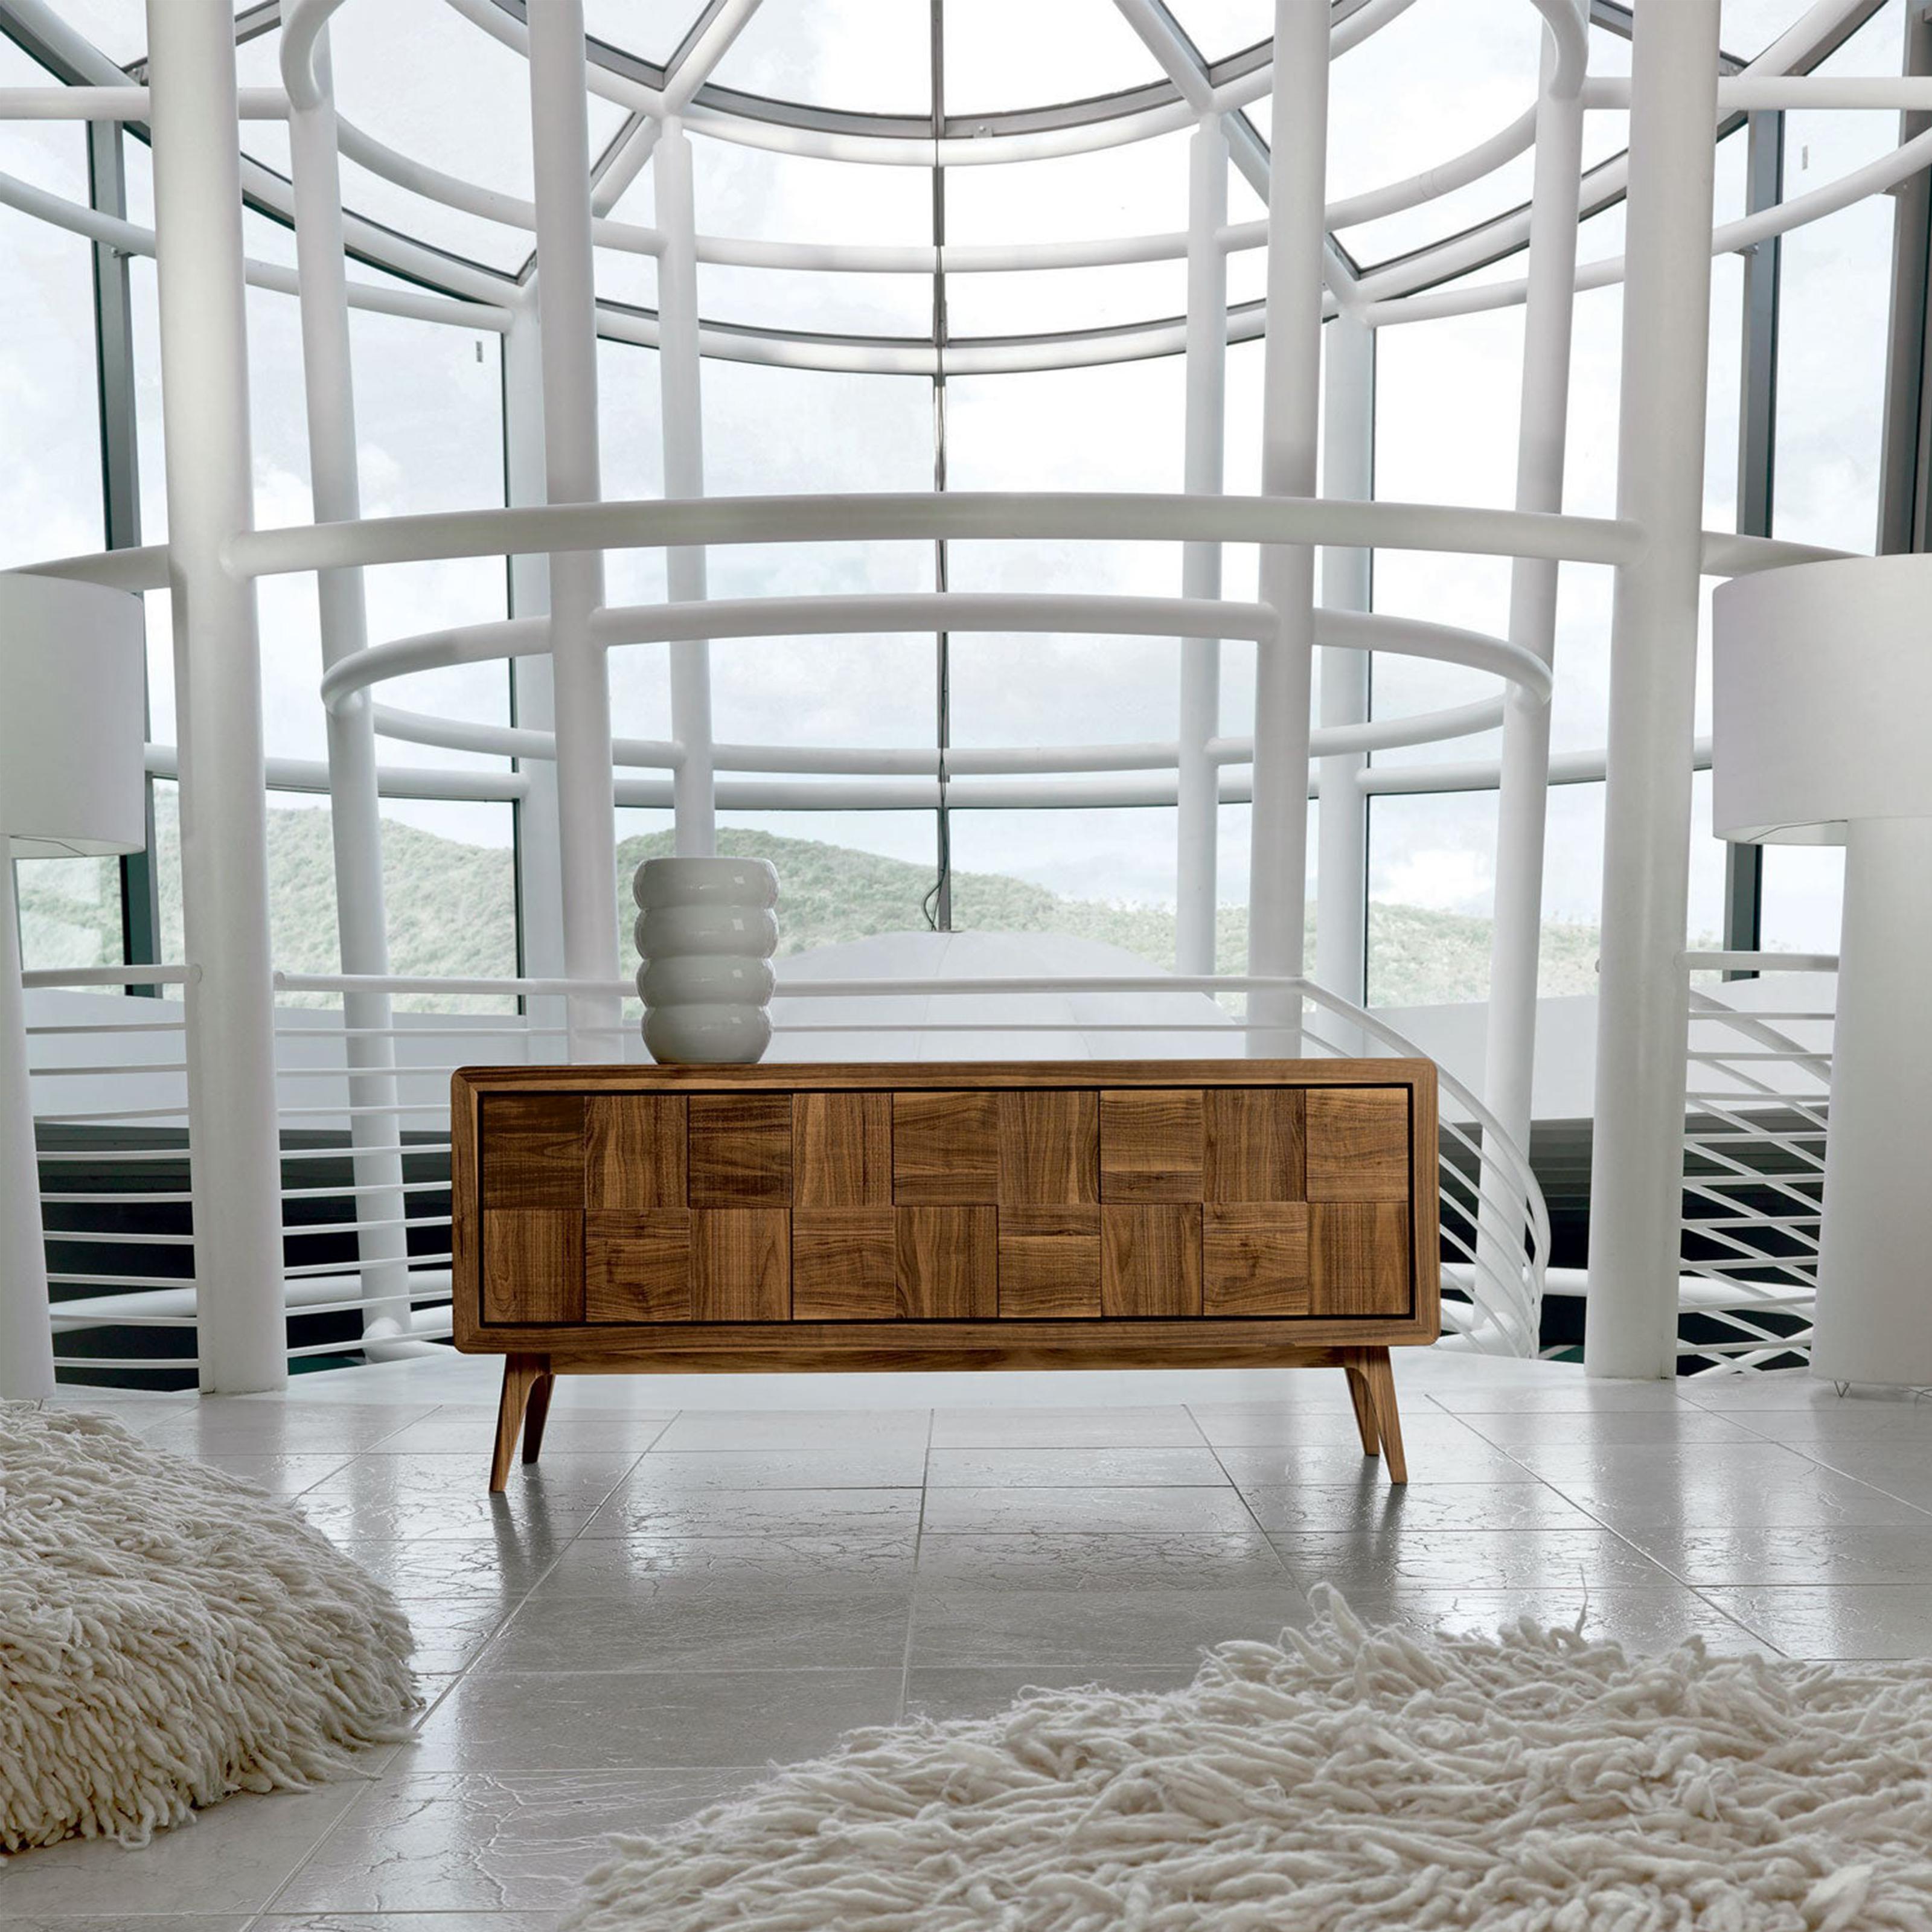 Artes Quadro Solid Wood Sideboard, Walnut Natural Finish, Contemporary In New Condition For Sale In Cadeglioppi de Oppeano, VR